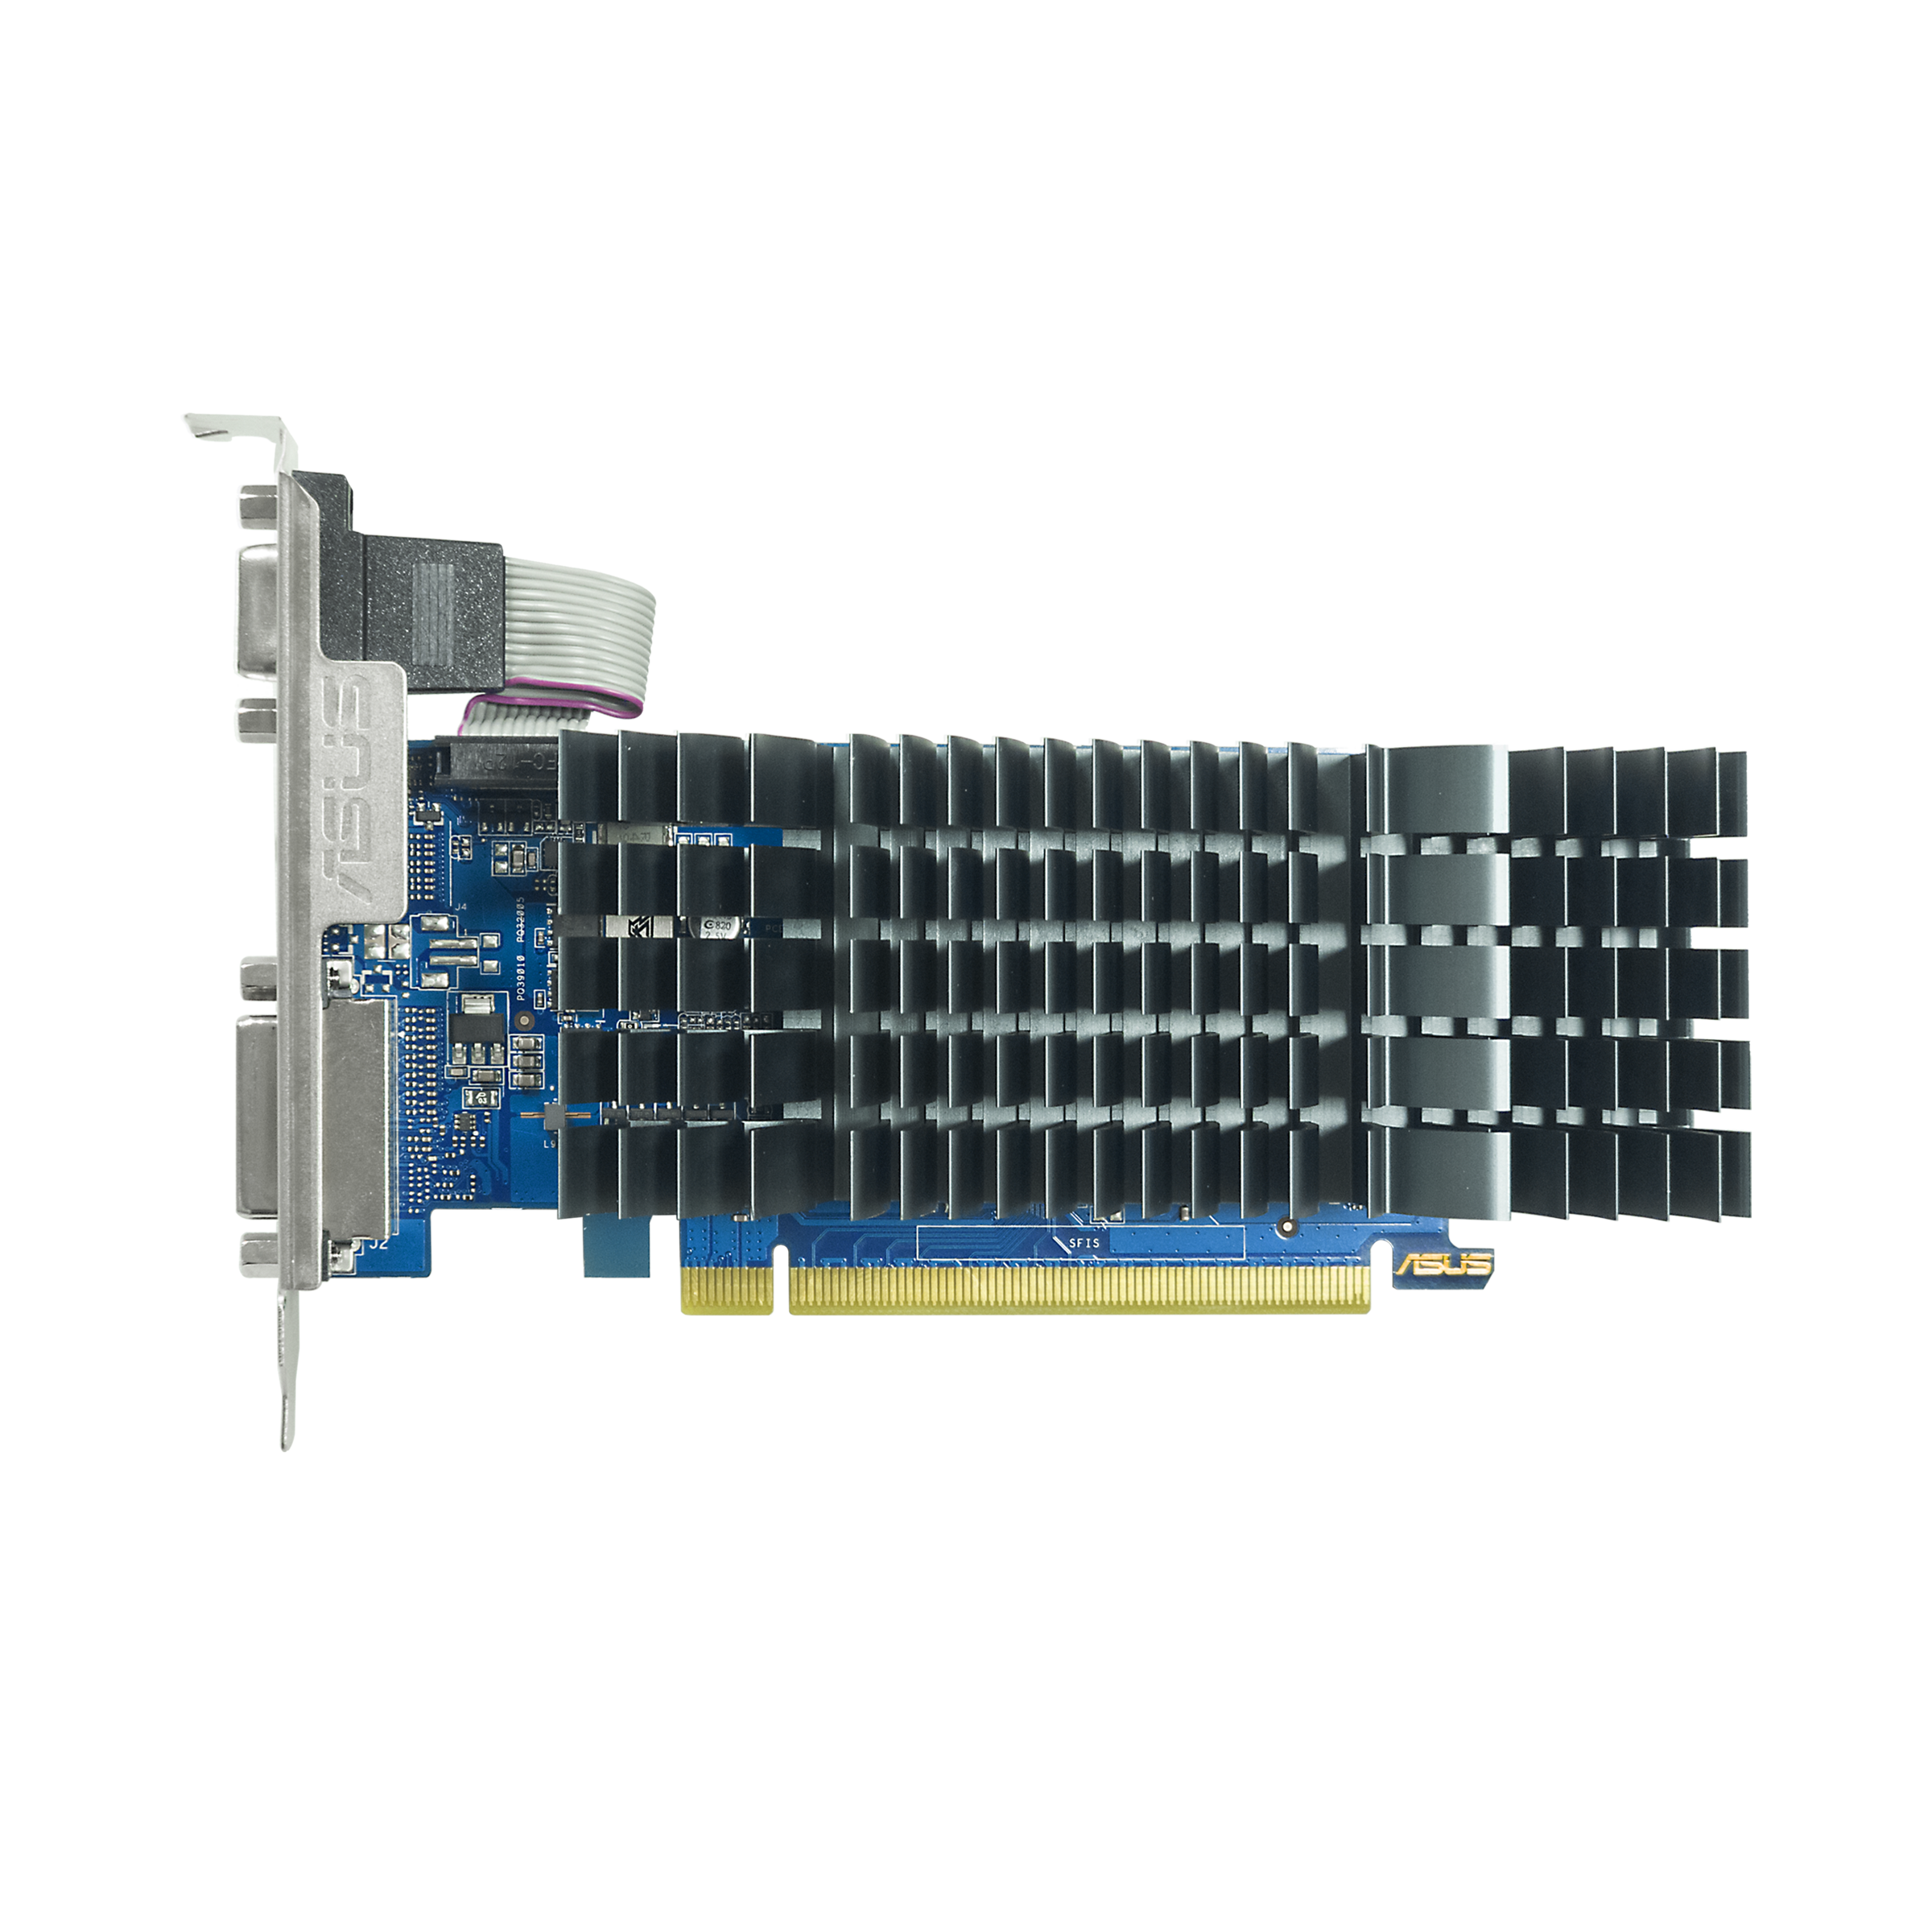 NVIDIA GeForce GT 710 PCIe x1 Specs